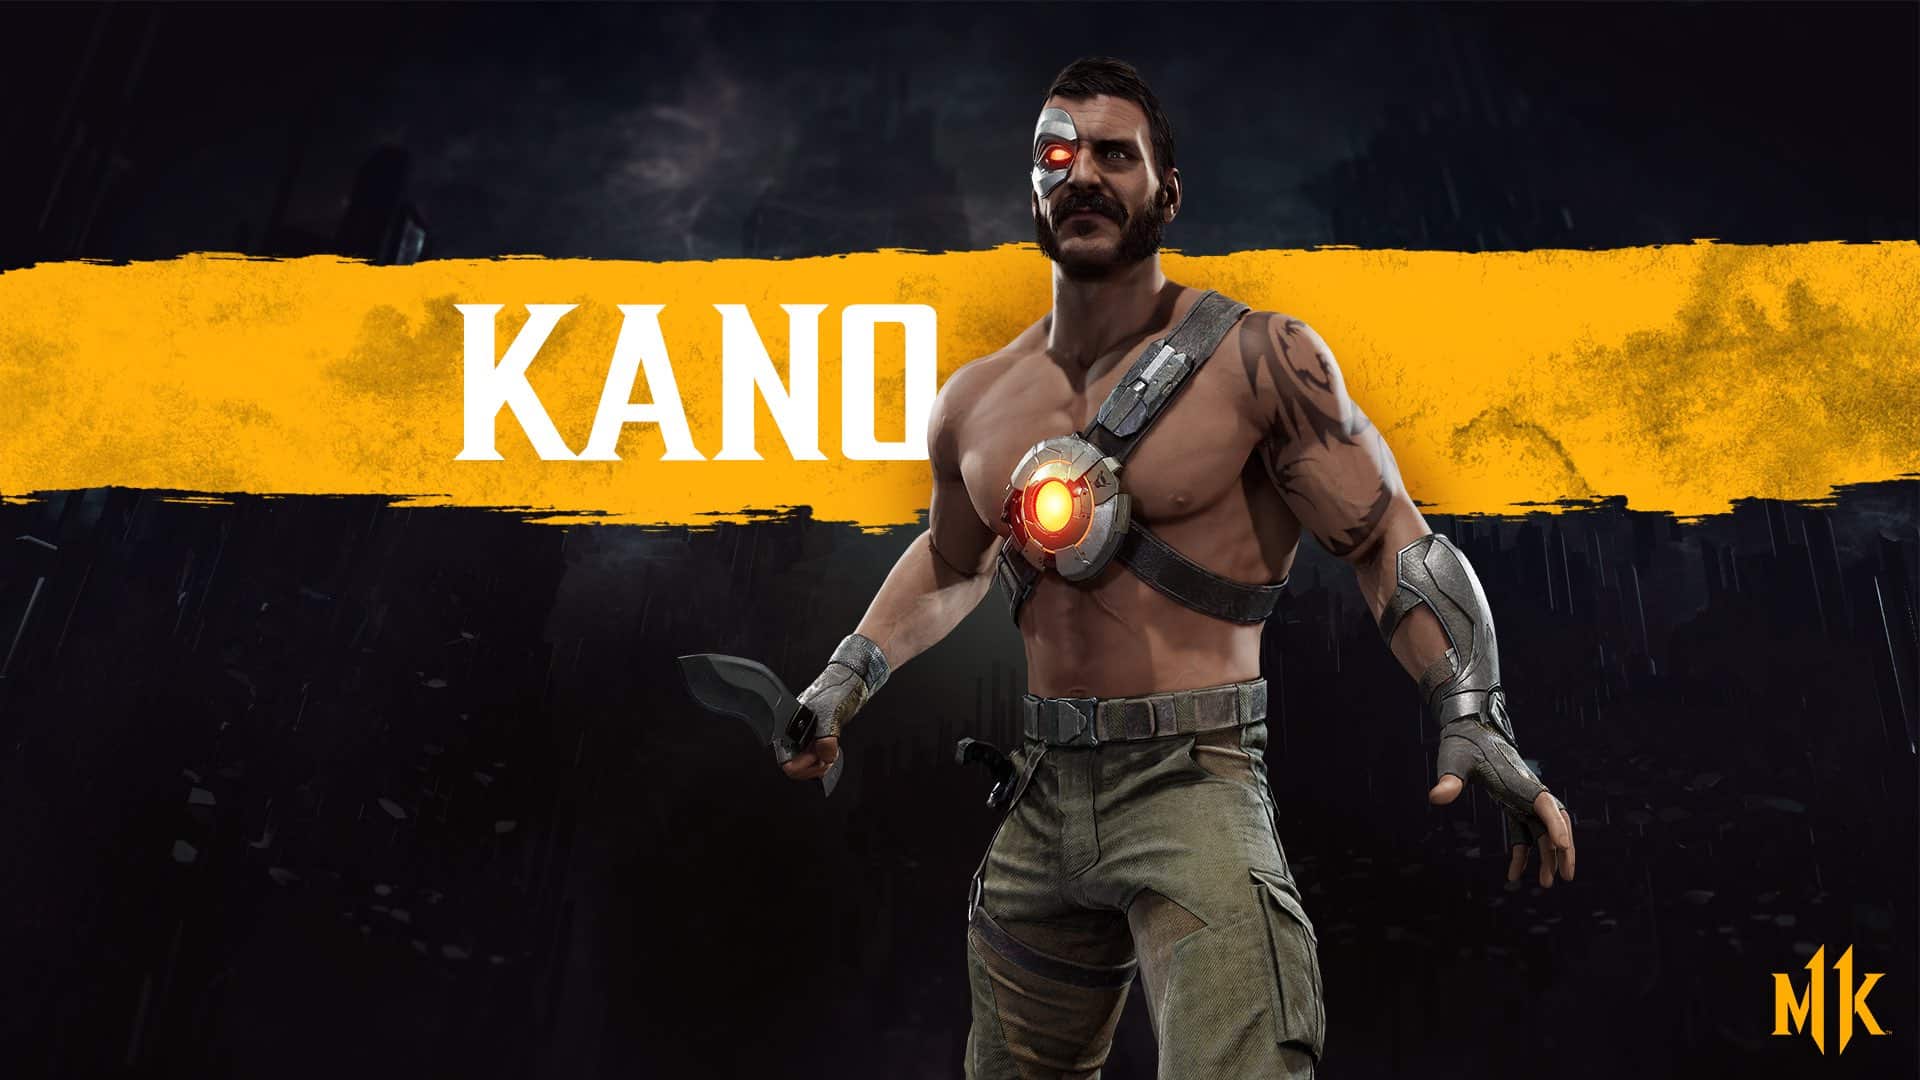 Kano Mortal Kombat 11 Reveal